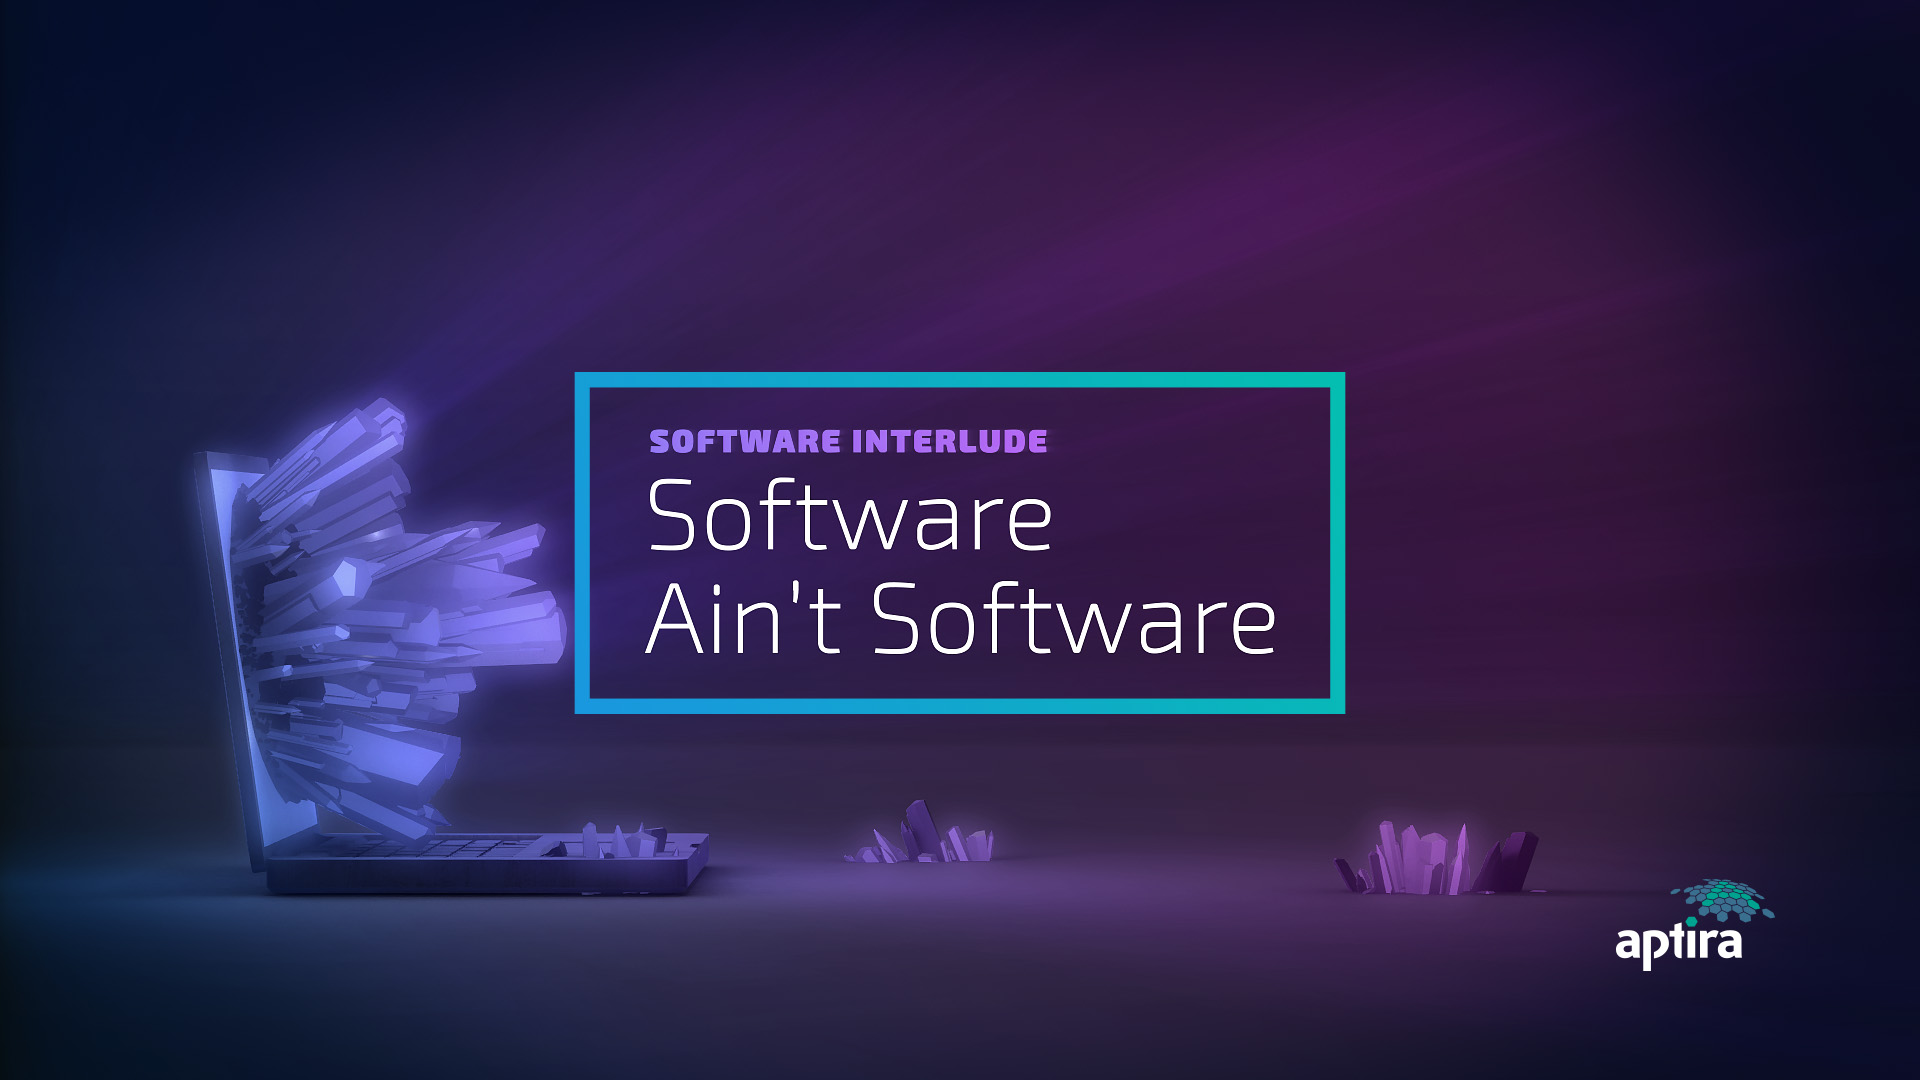 Aptira Open Networking Software Interlude - Software ain't Software